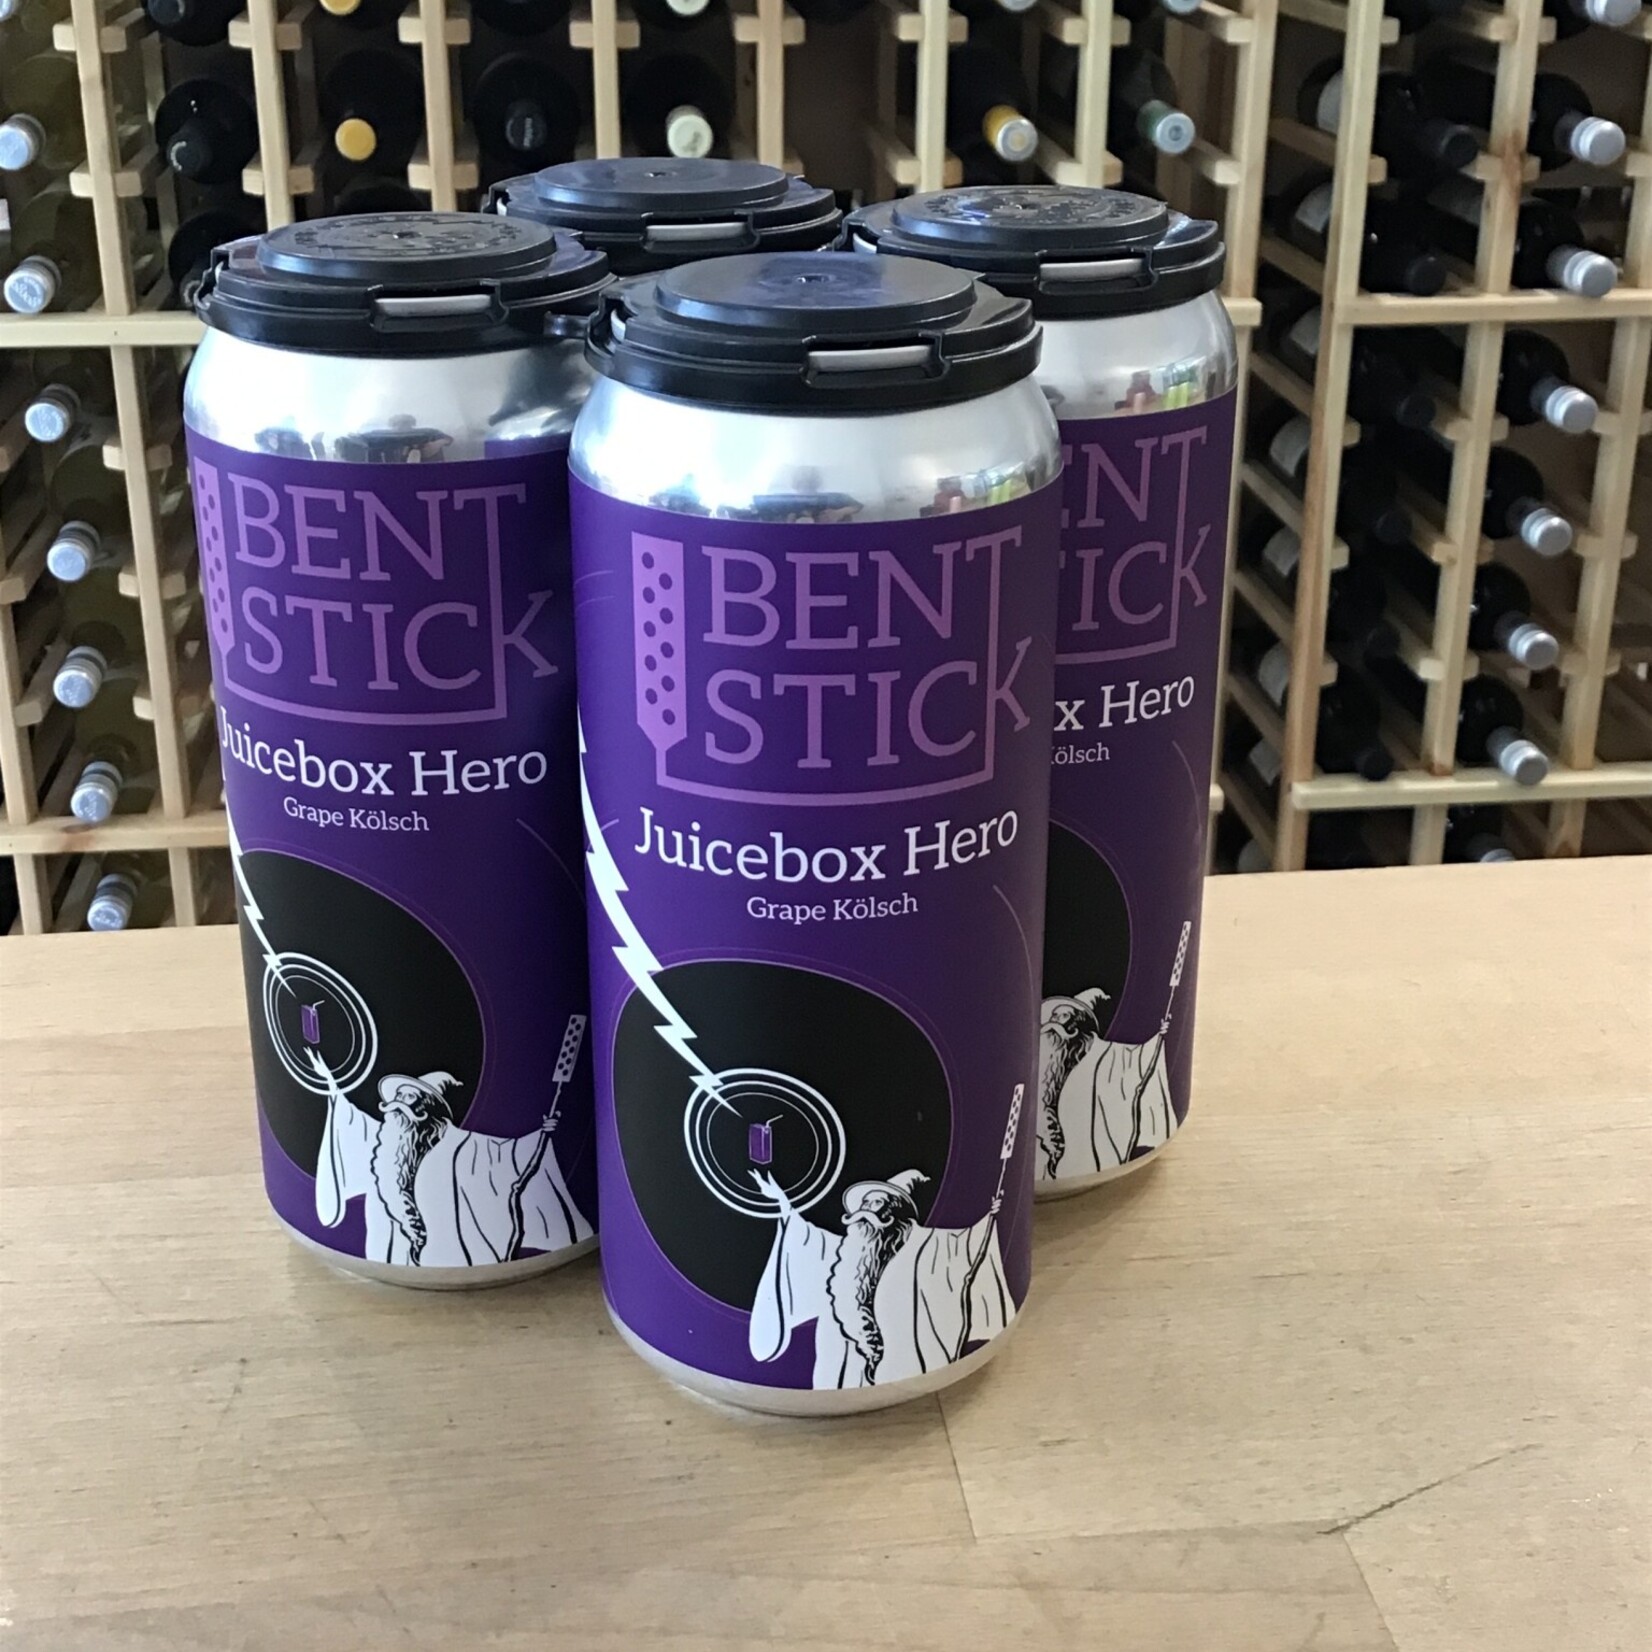 Bent Stick 'Juicebox Hero' Grape Kolsch, Bent Stick 4x473ml 5%